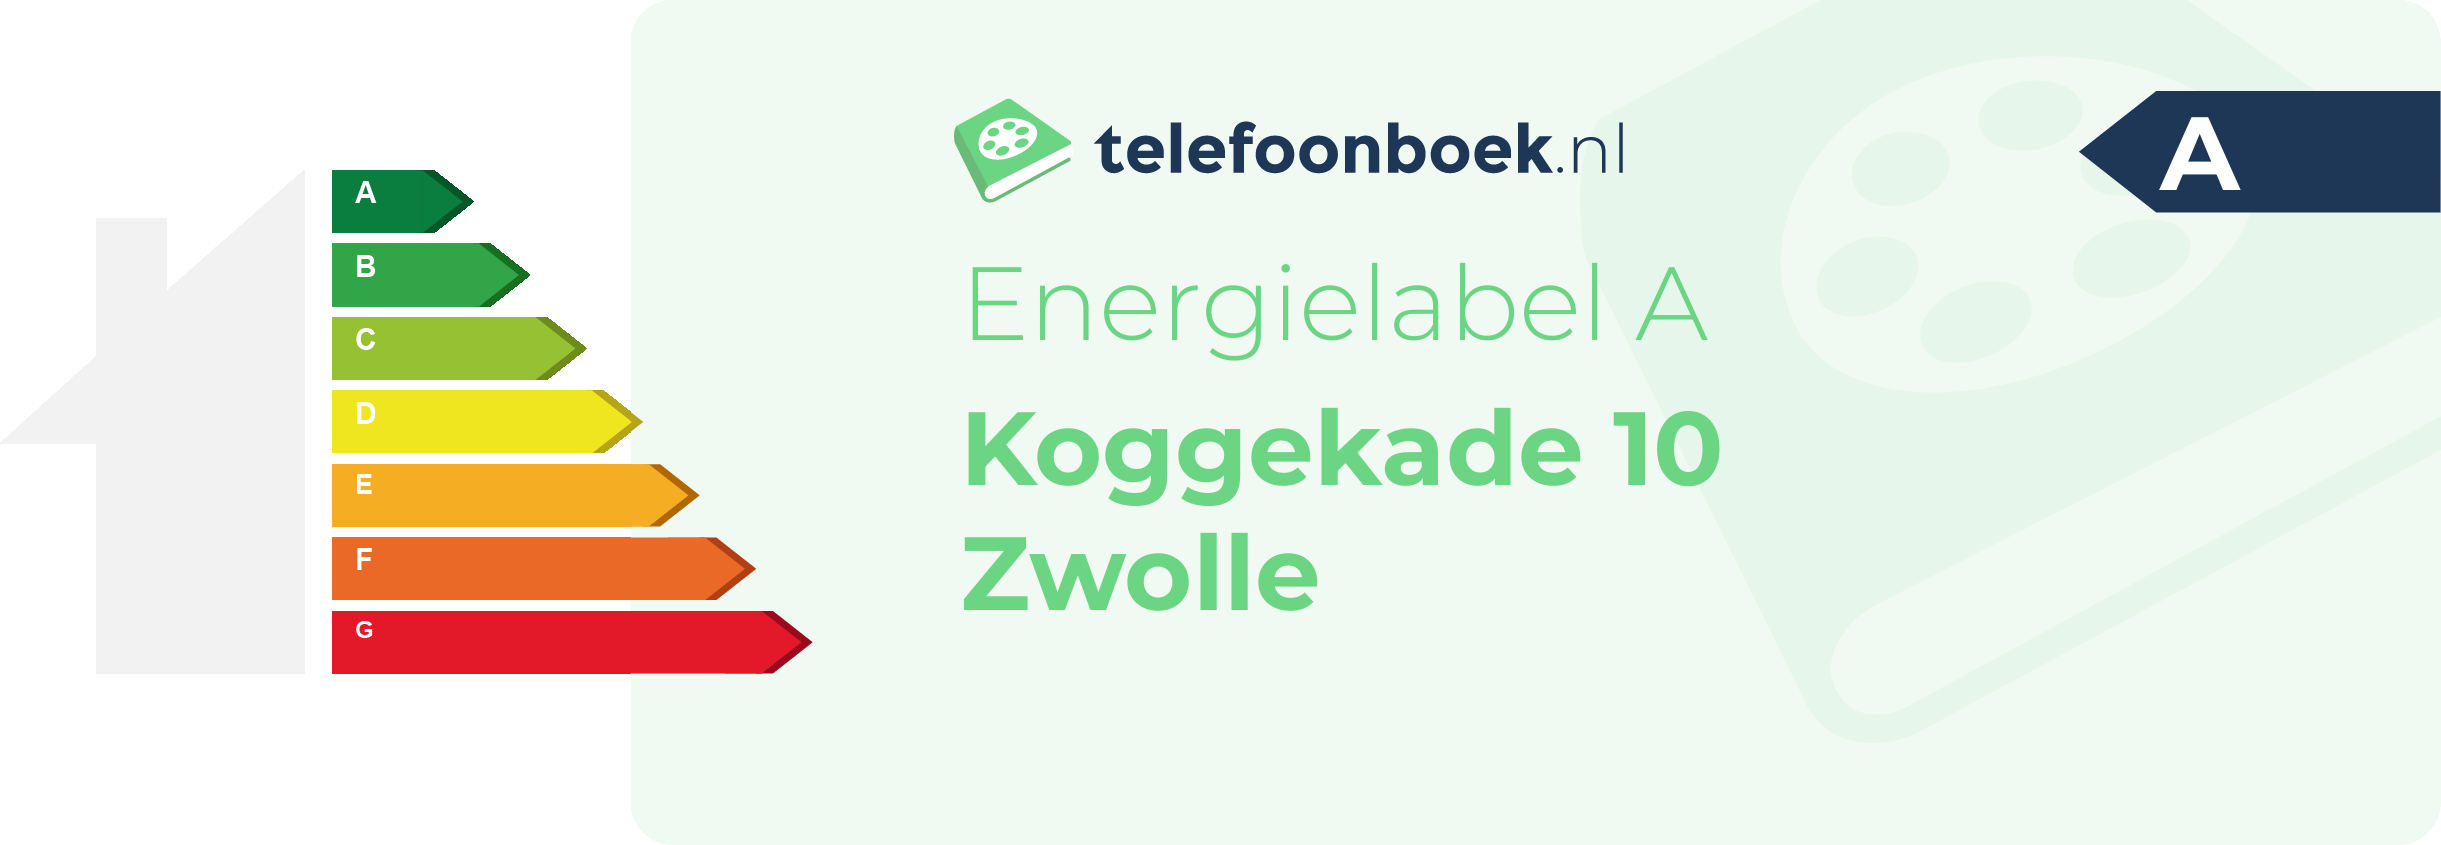 Energielabel Koggekade 10 Zwolle